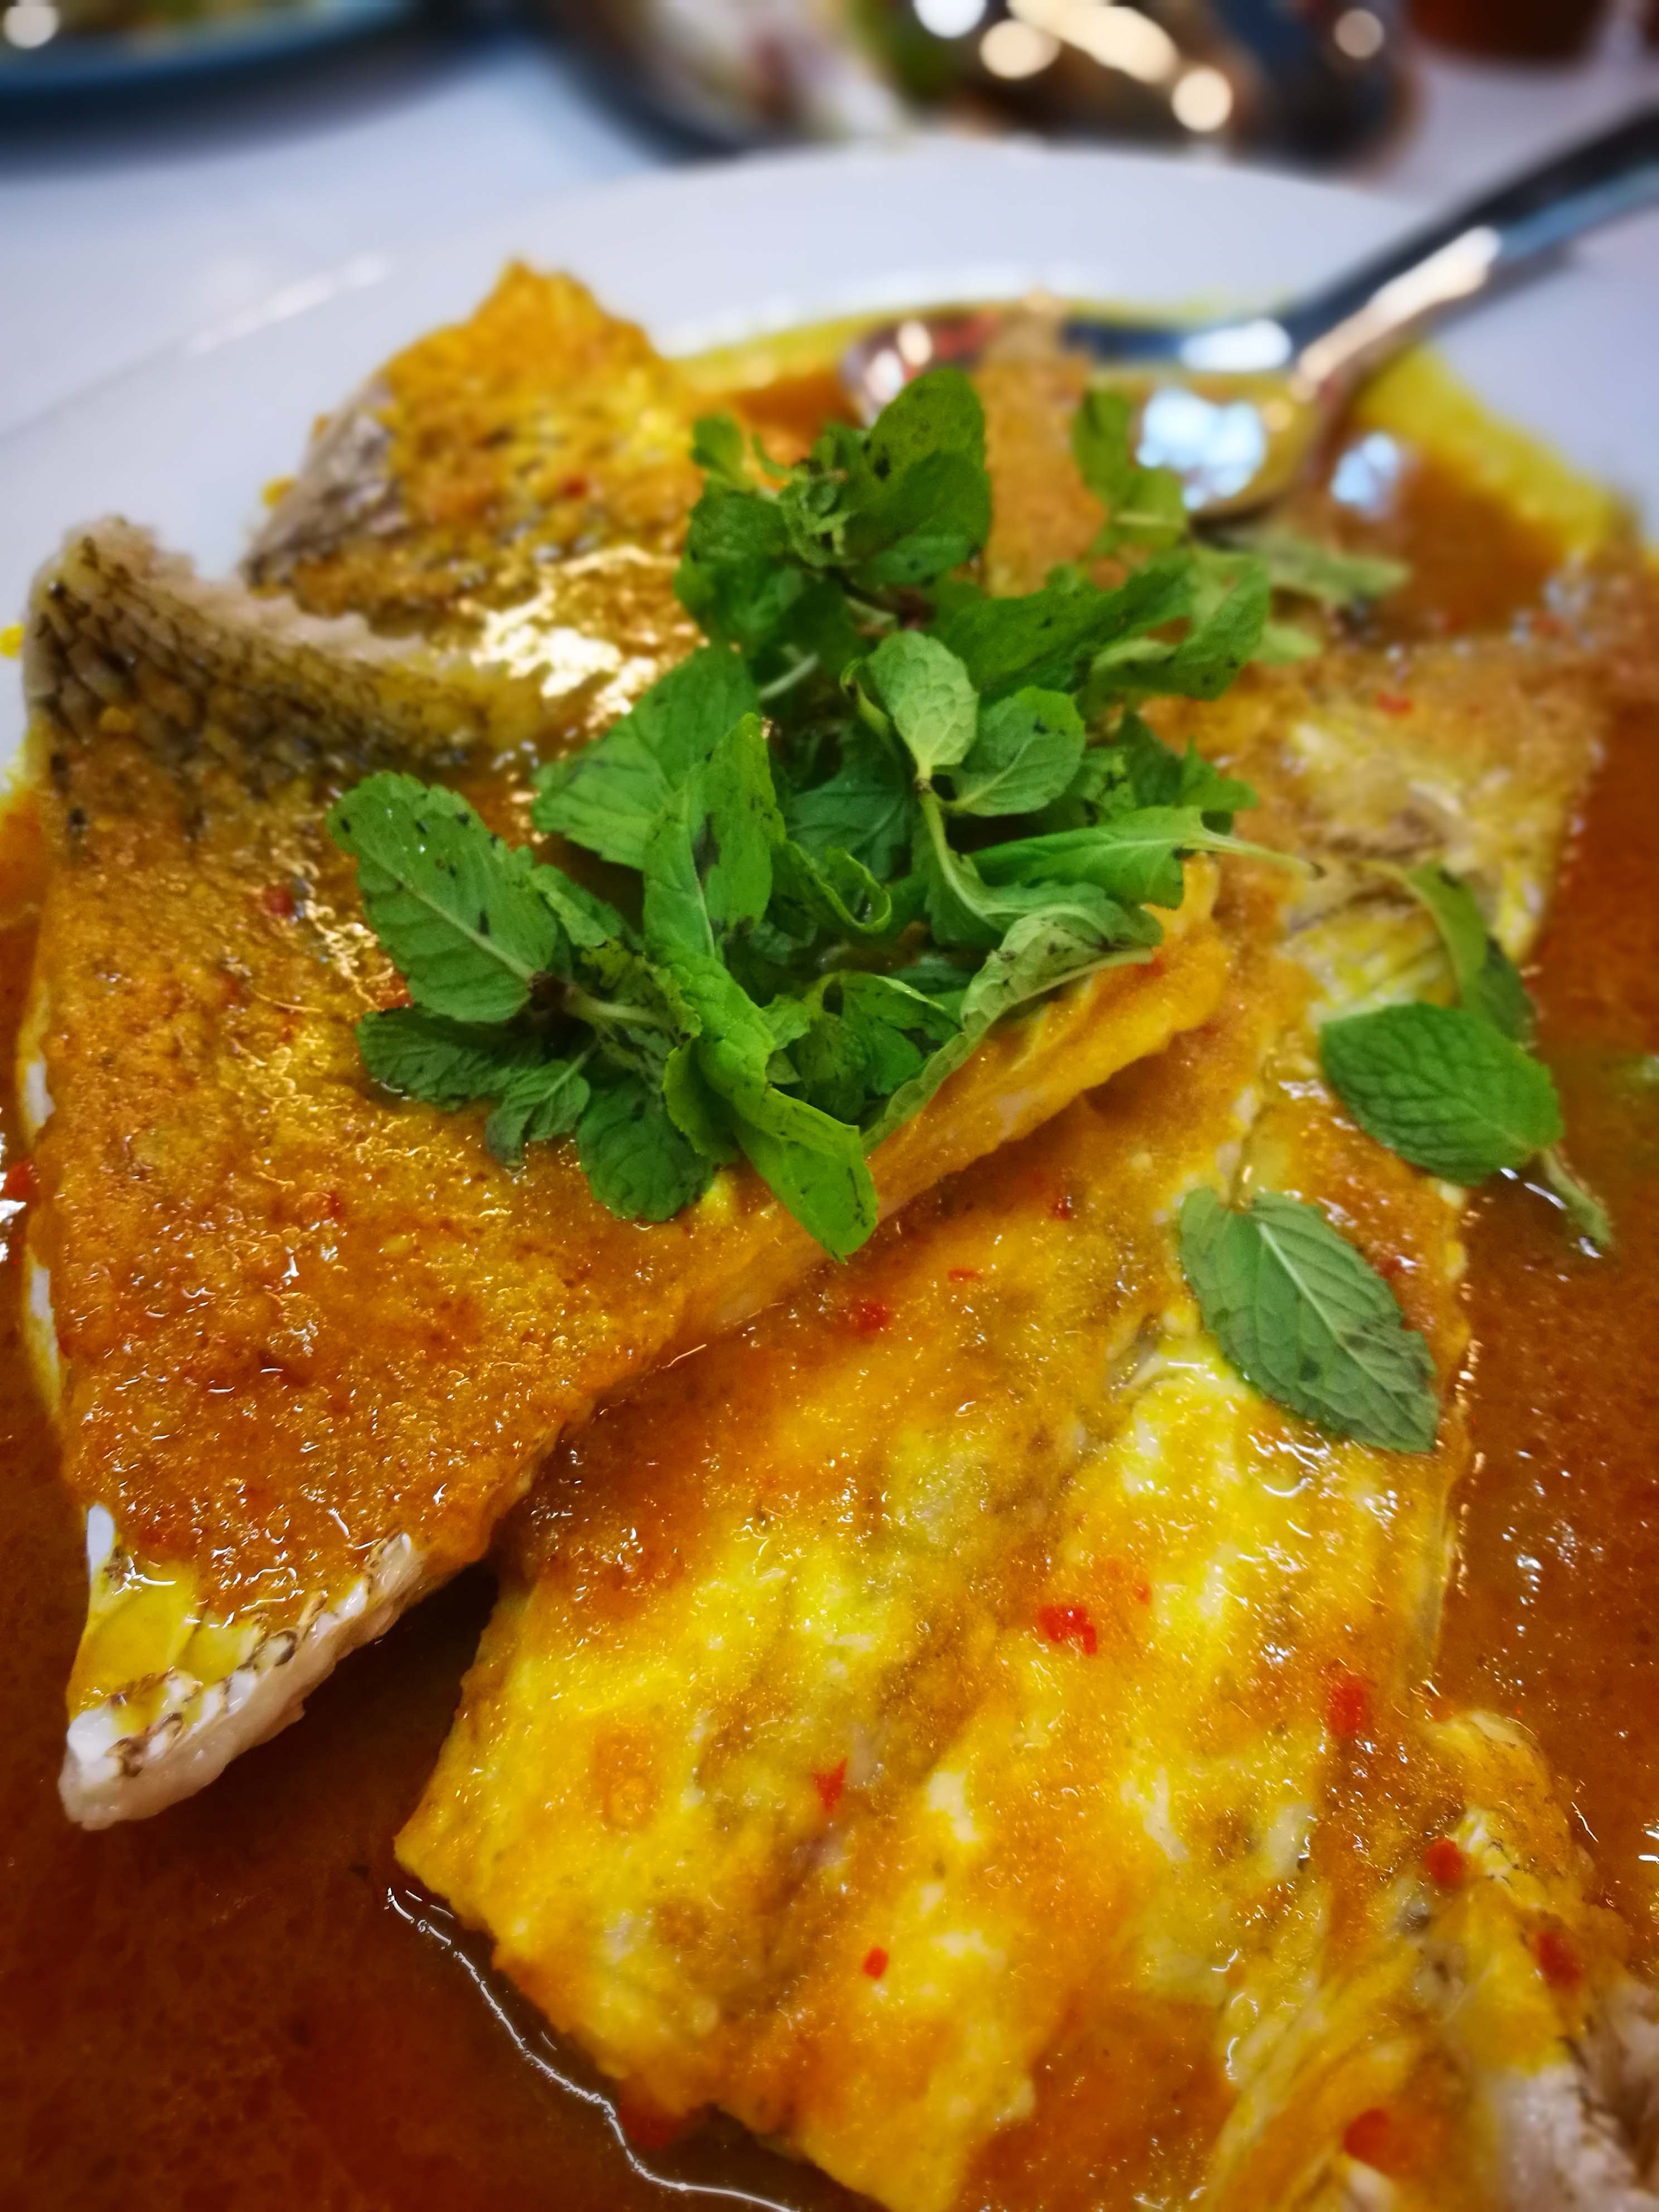 Sunshine Bay Seafood, Seafood Chinese cuisine at Tanjung Bungah, Penang